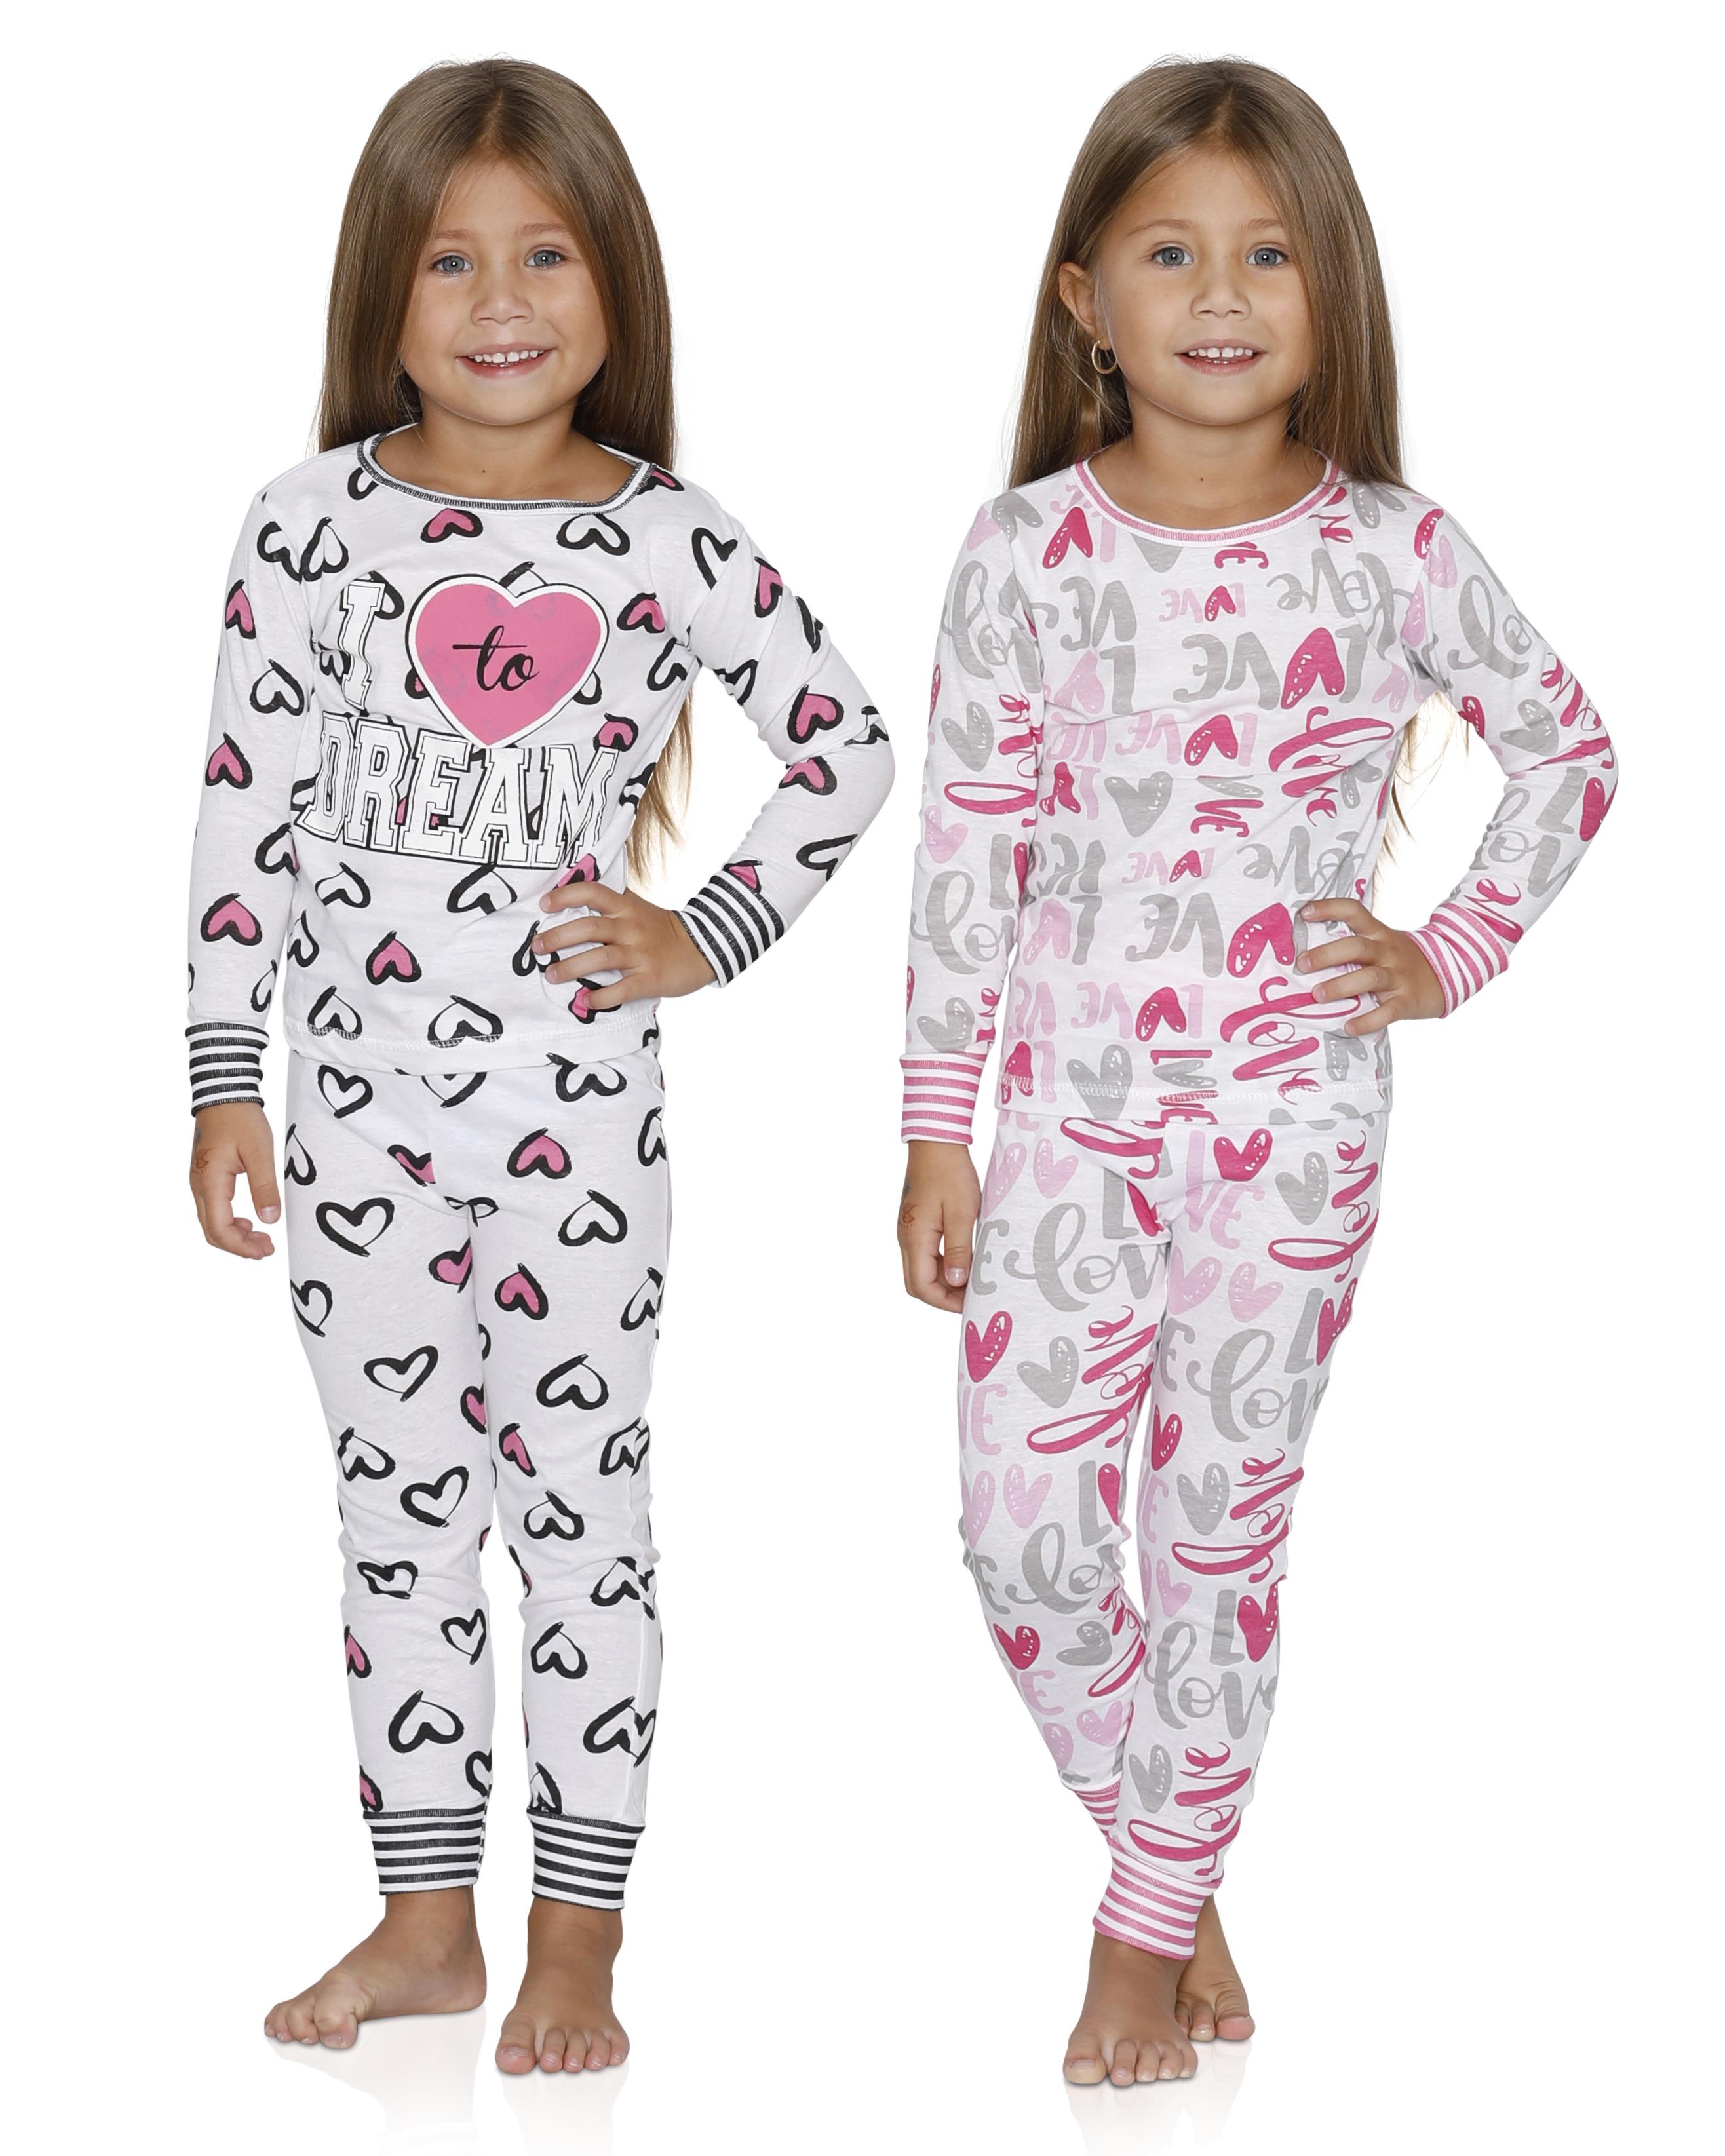 Sultan Industries - Girls Pajama Fun Print Costume 4 Piece Pc Cotton ...